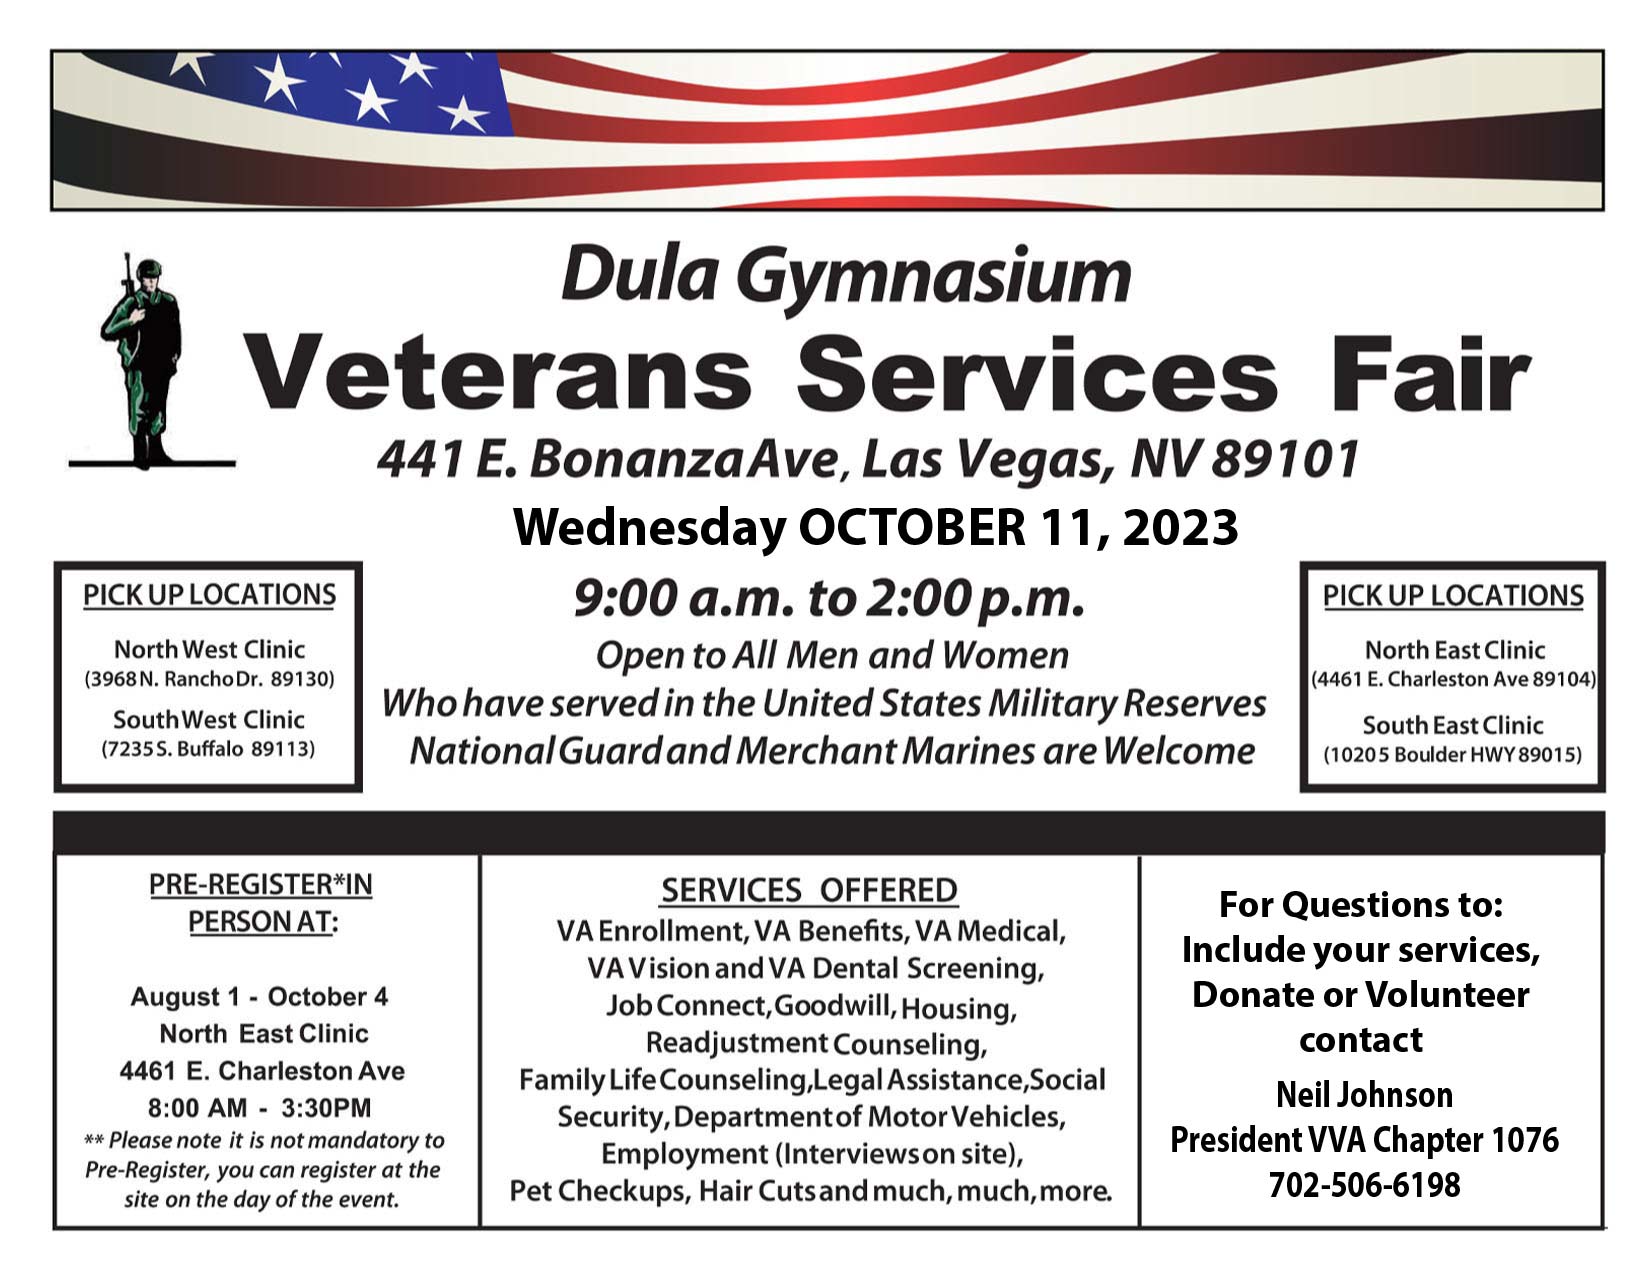 Veterans Services Fair flyer – October 11, 2023